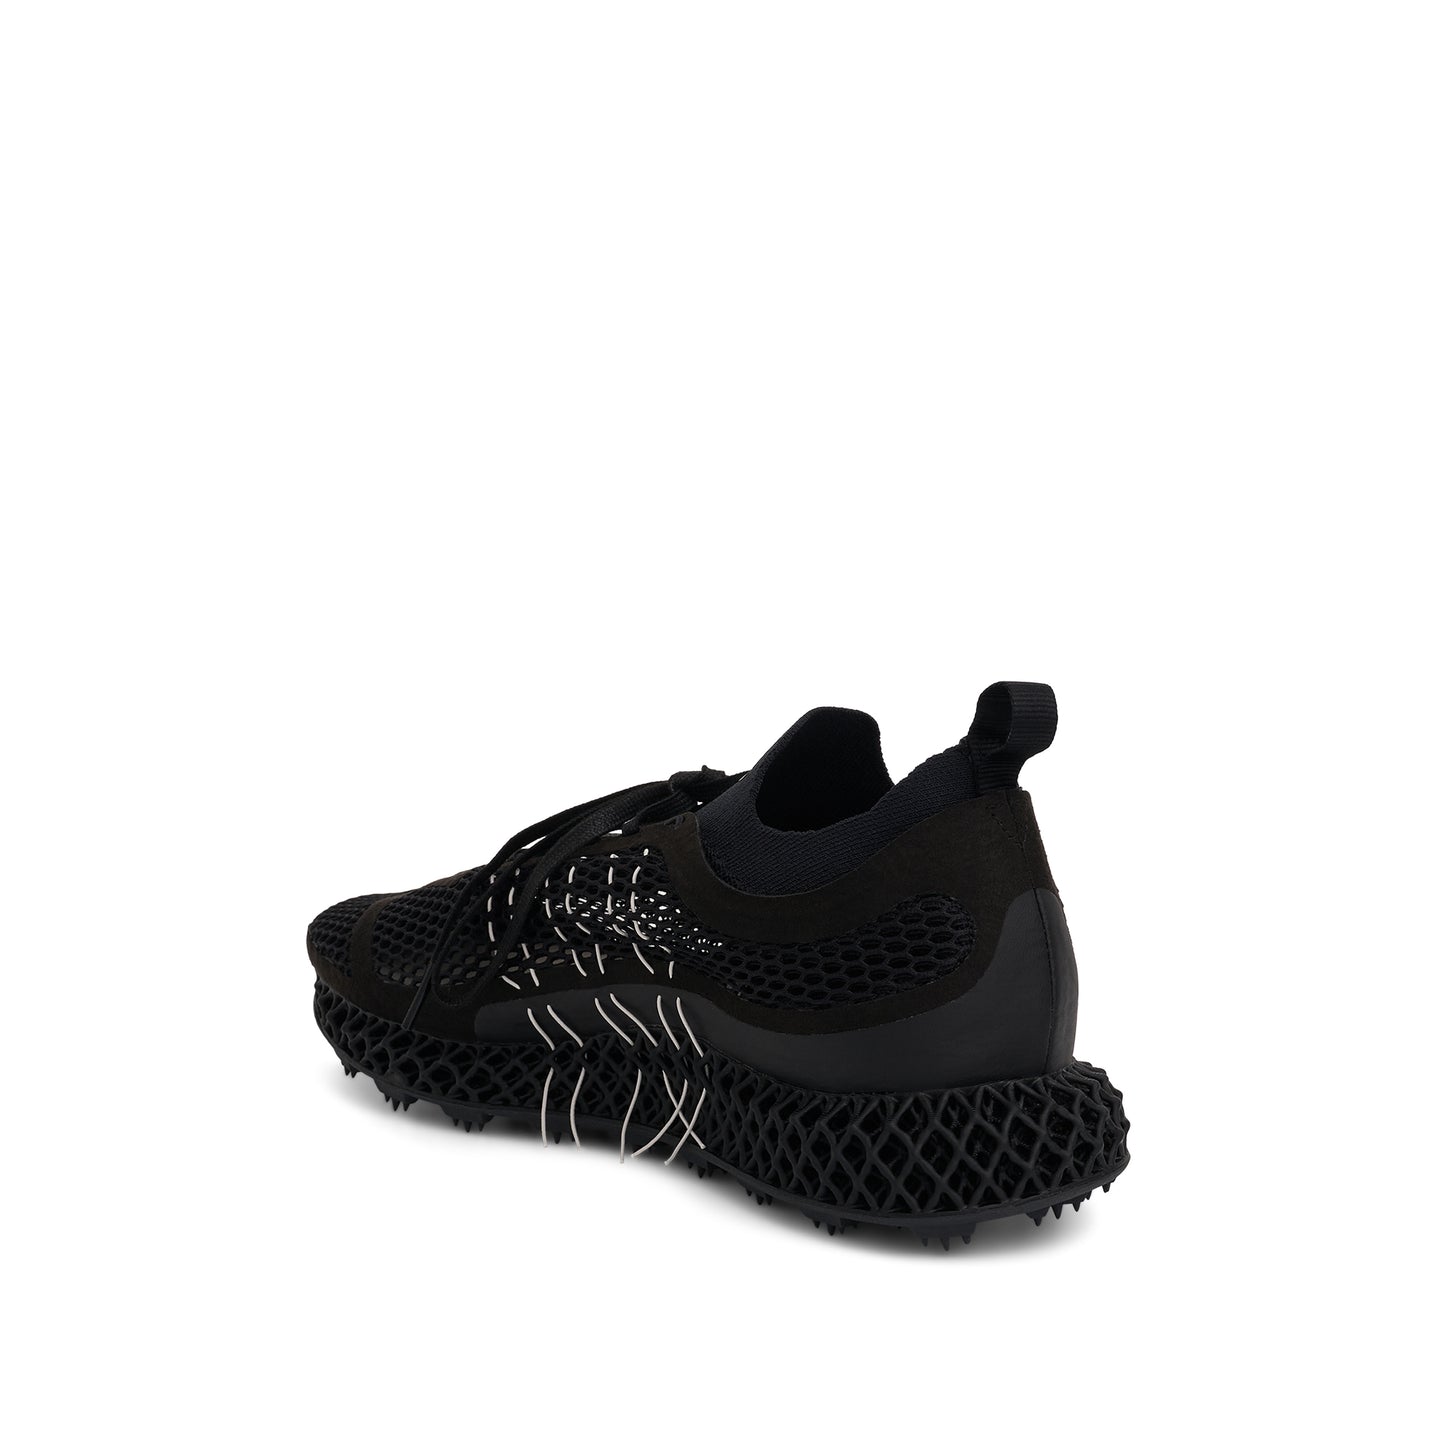 Runner 4D Halo Sneakers in Black/Off White